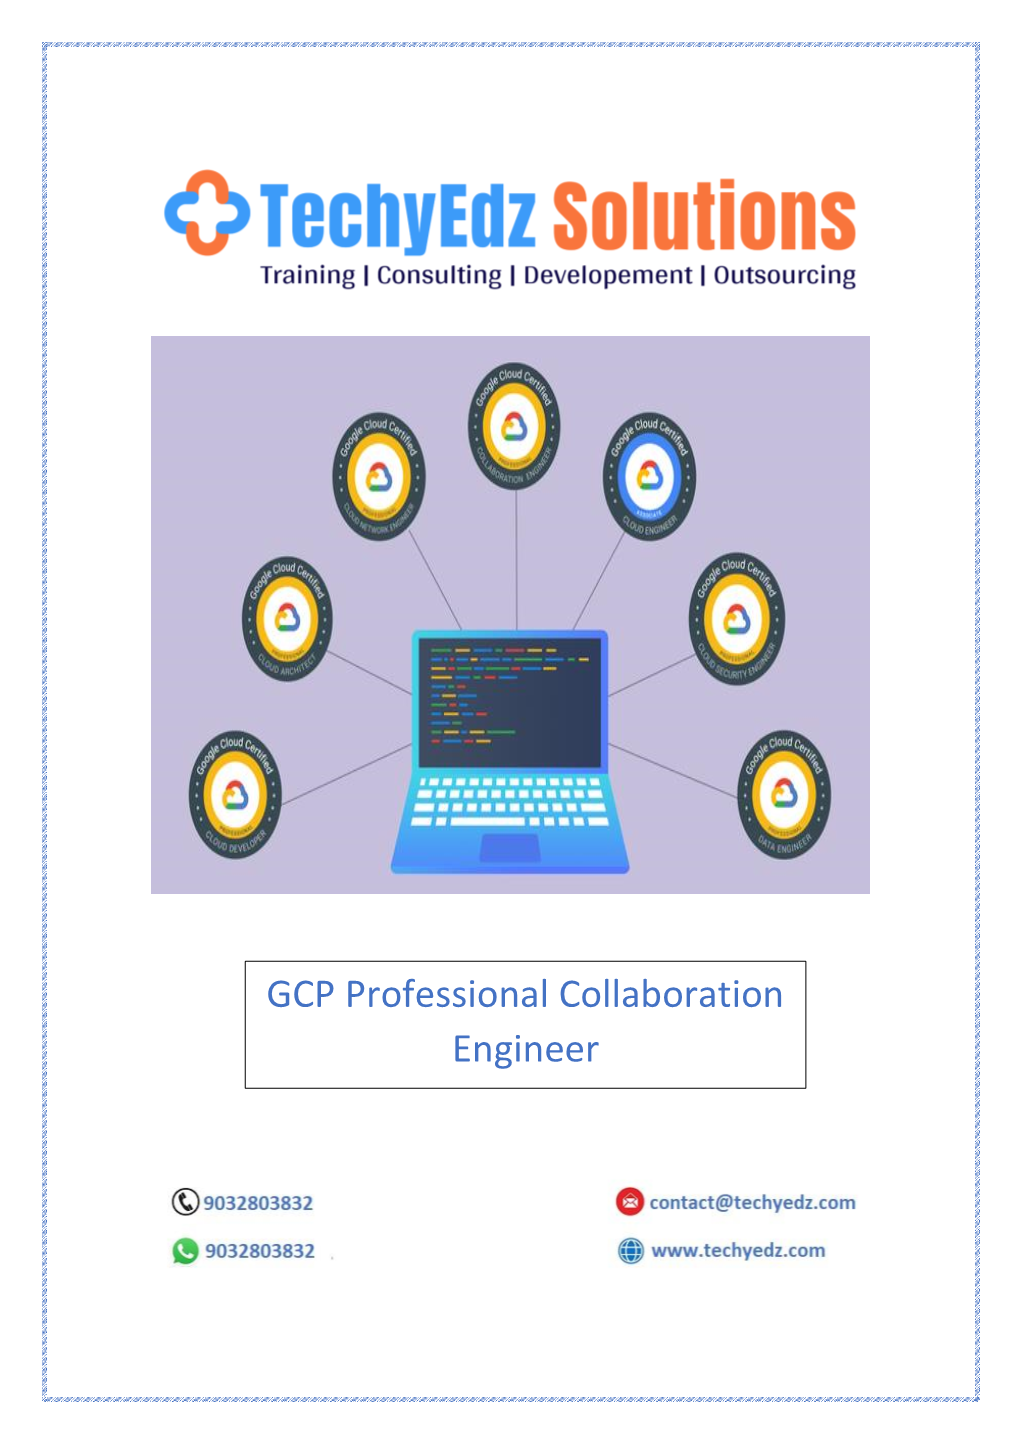 GCP Professional Collaboration Engineer